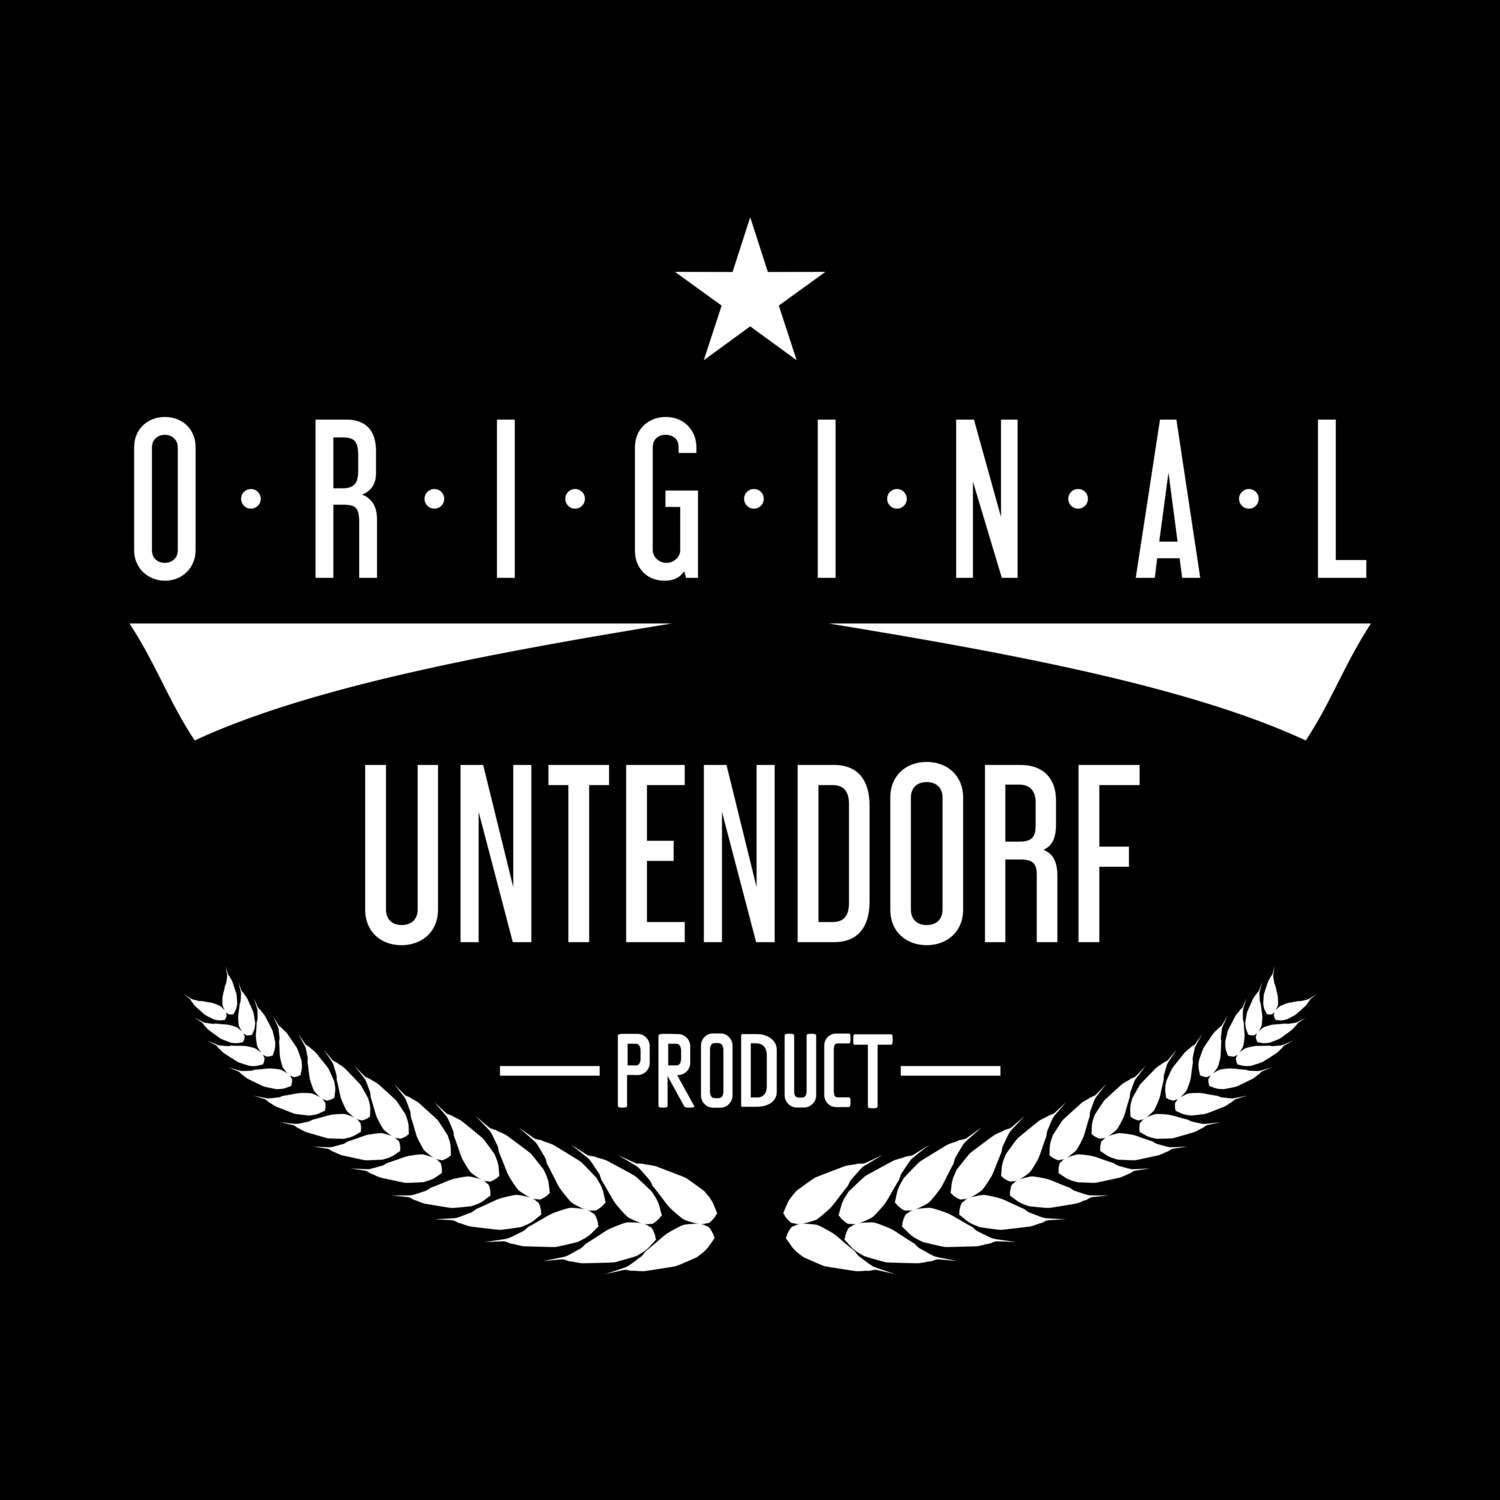 Untendorf T-Shirt »Original Product«